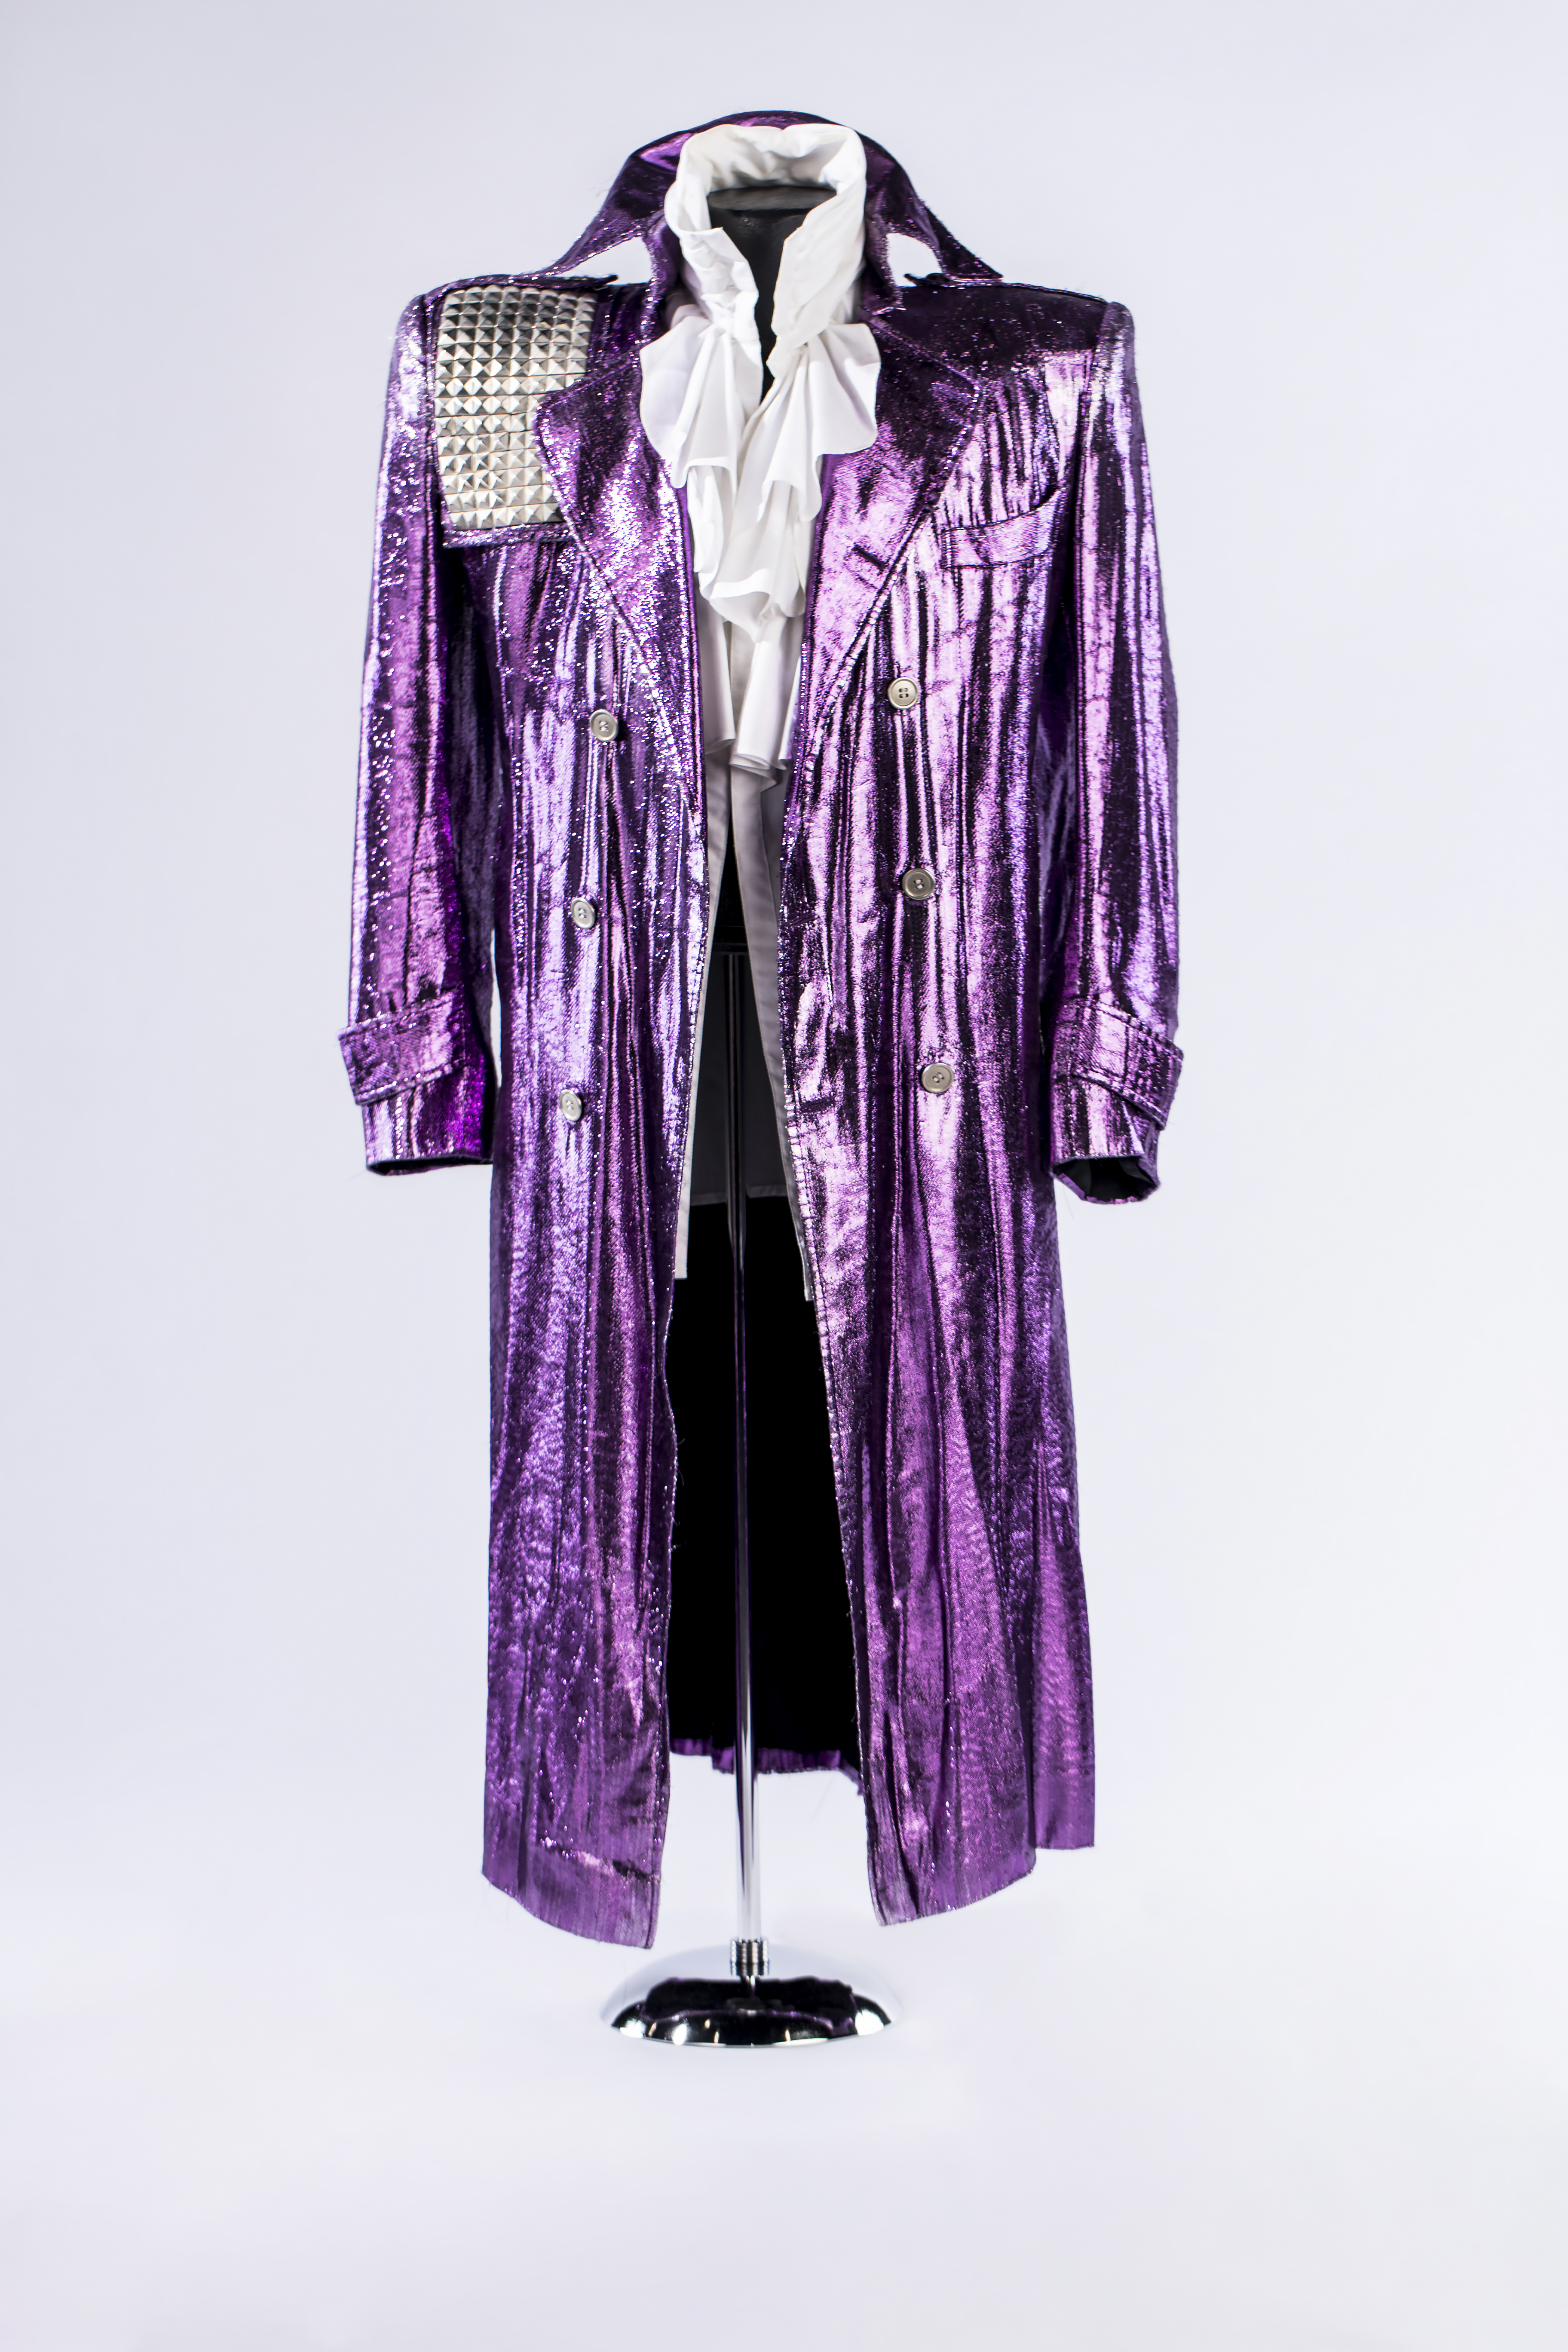 Prince's Purple Rain jacket 